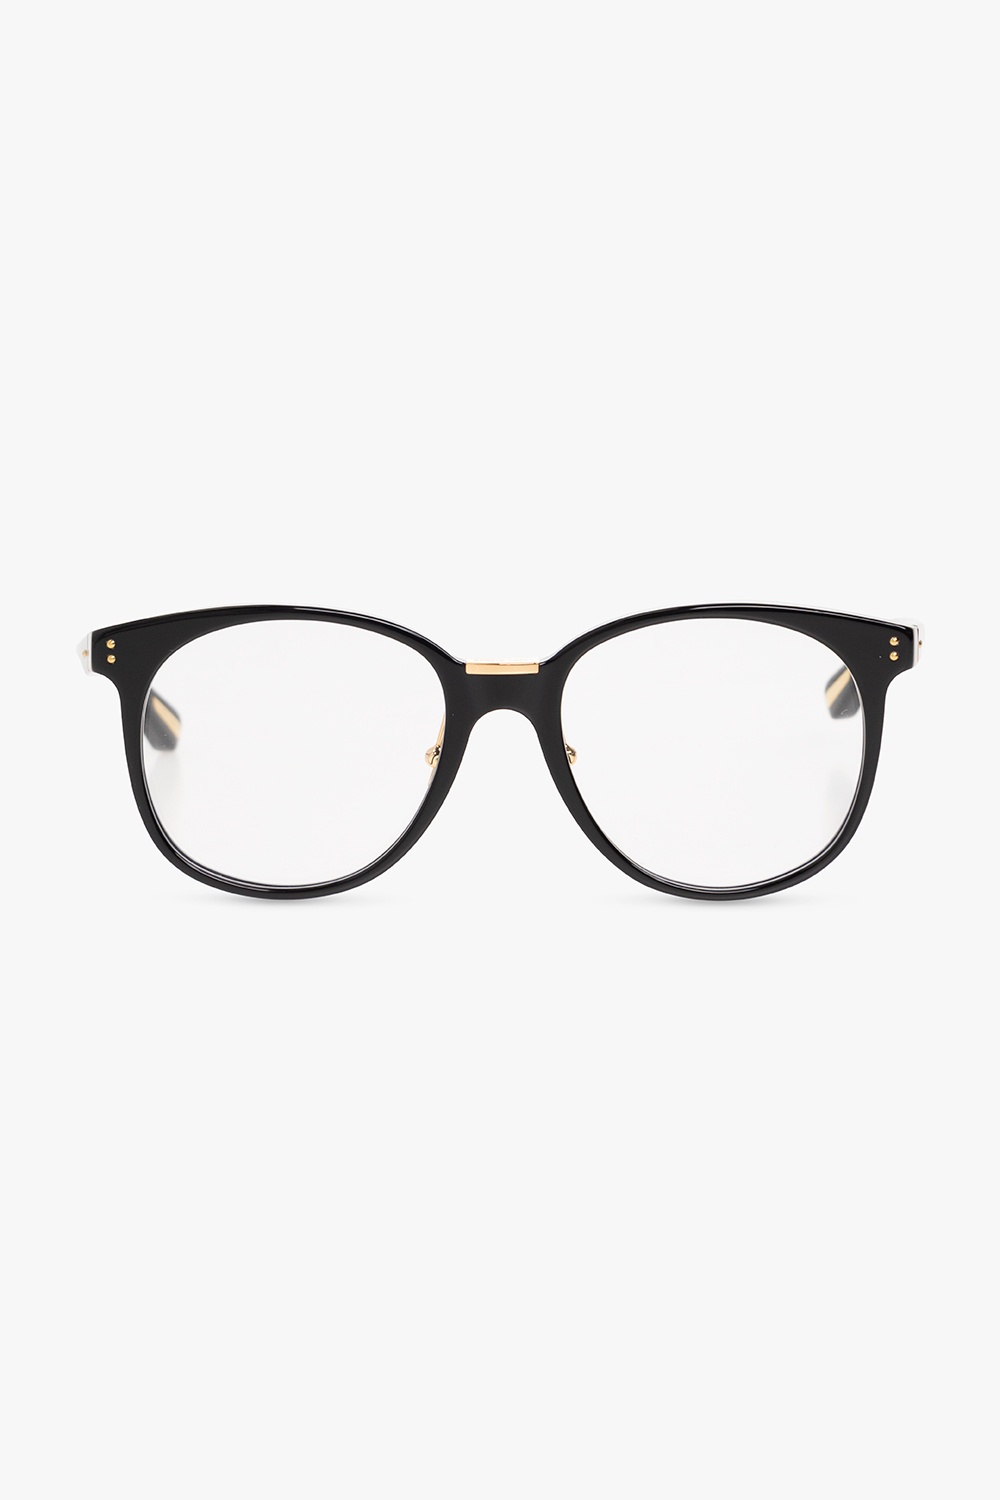 Linda Farrow ‘Palla’ optical glasses